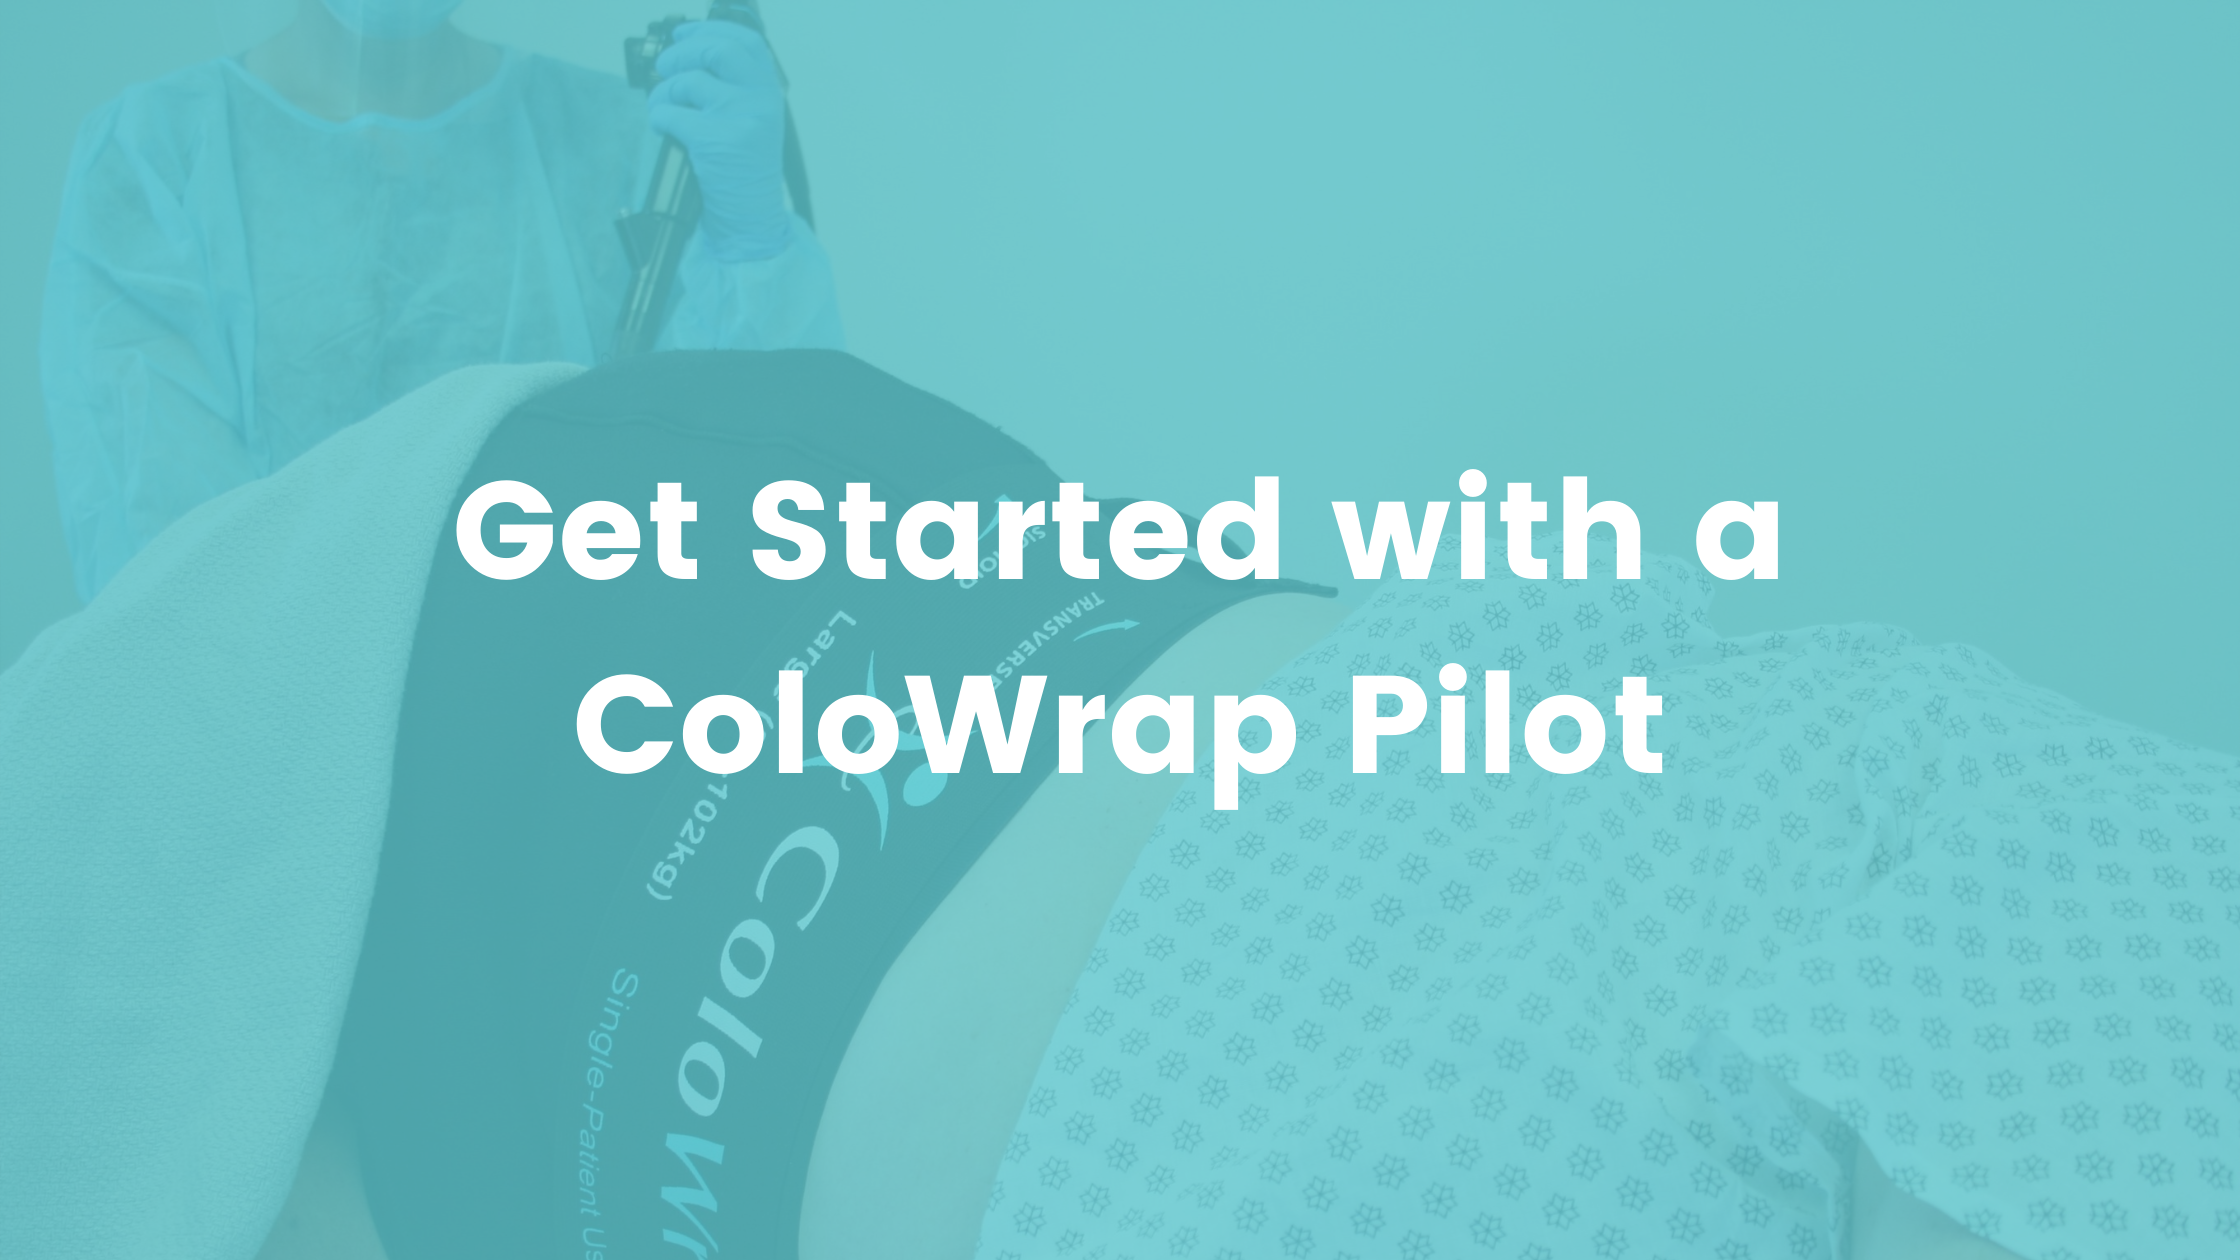 ColoWrap pilot